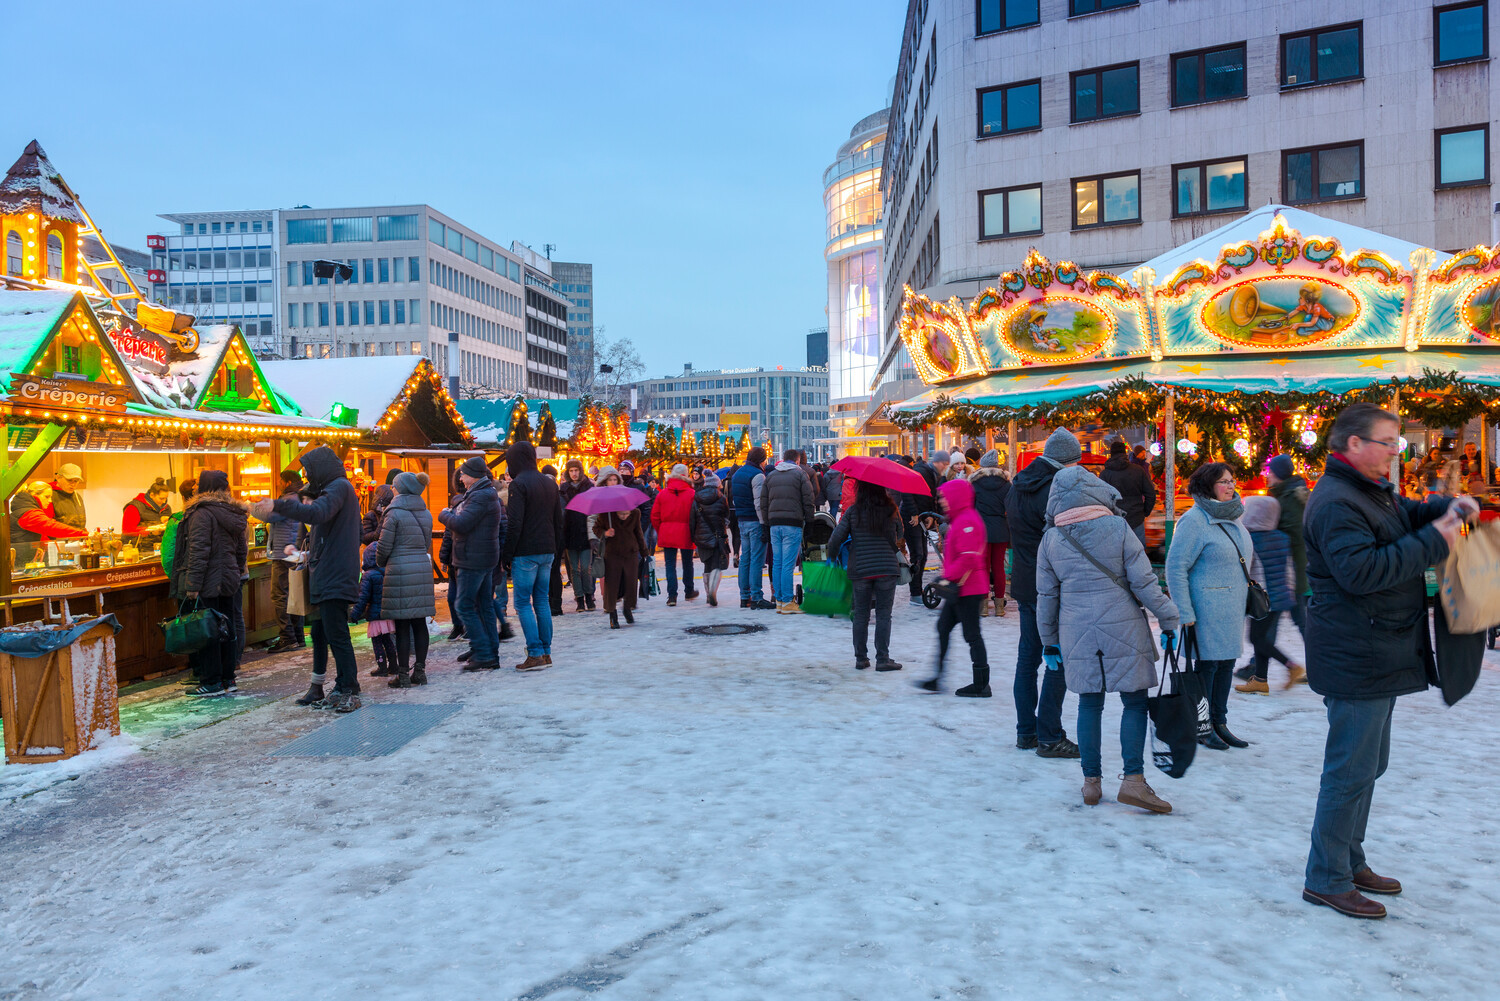 Kö-Bogen-Markt Christmas Market is one of the most magical Christmas markets in Düsseldorf